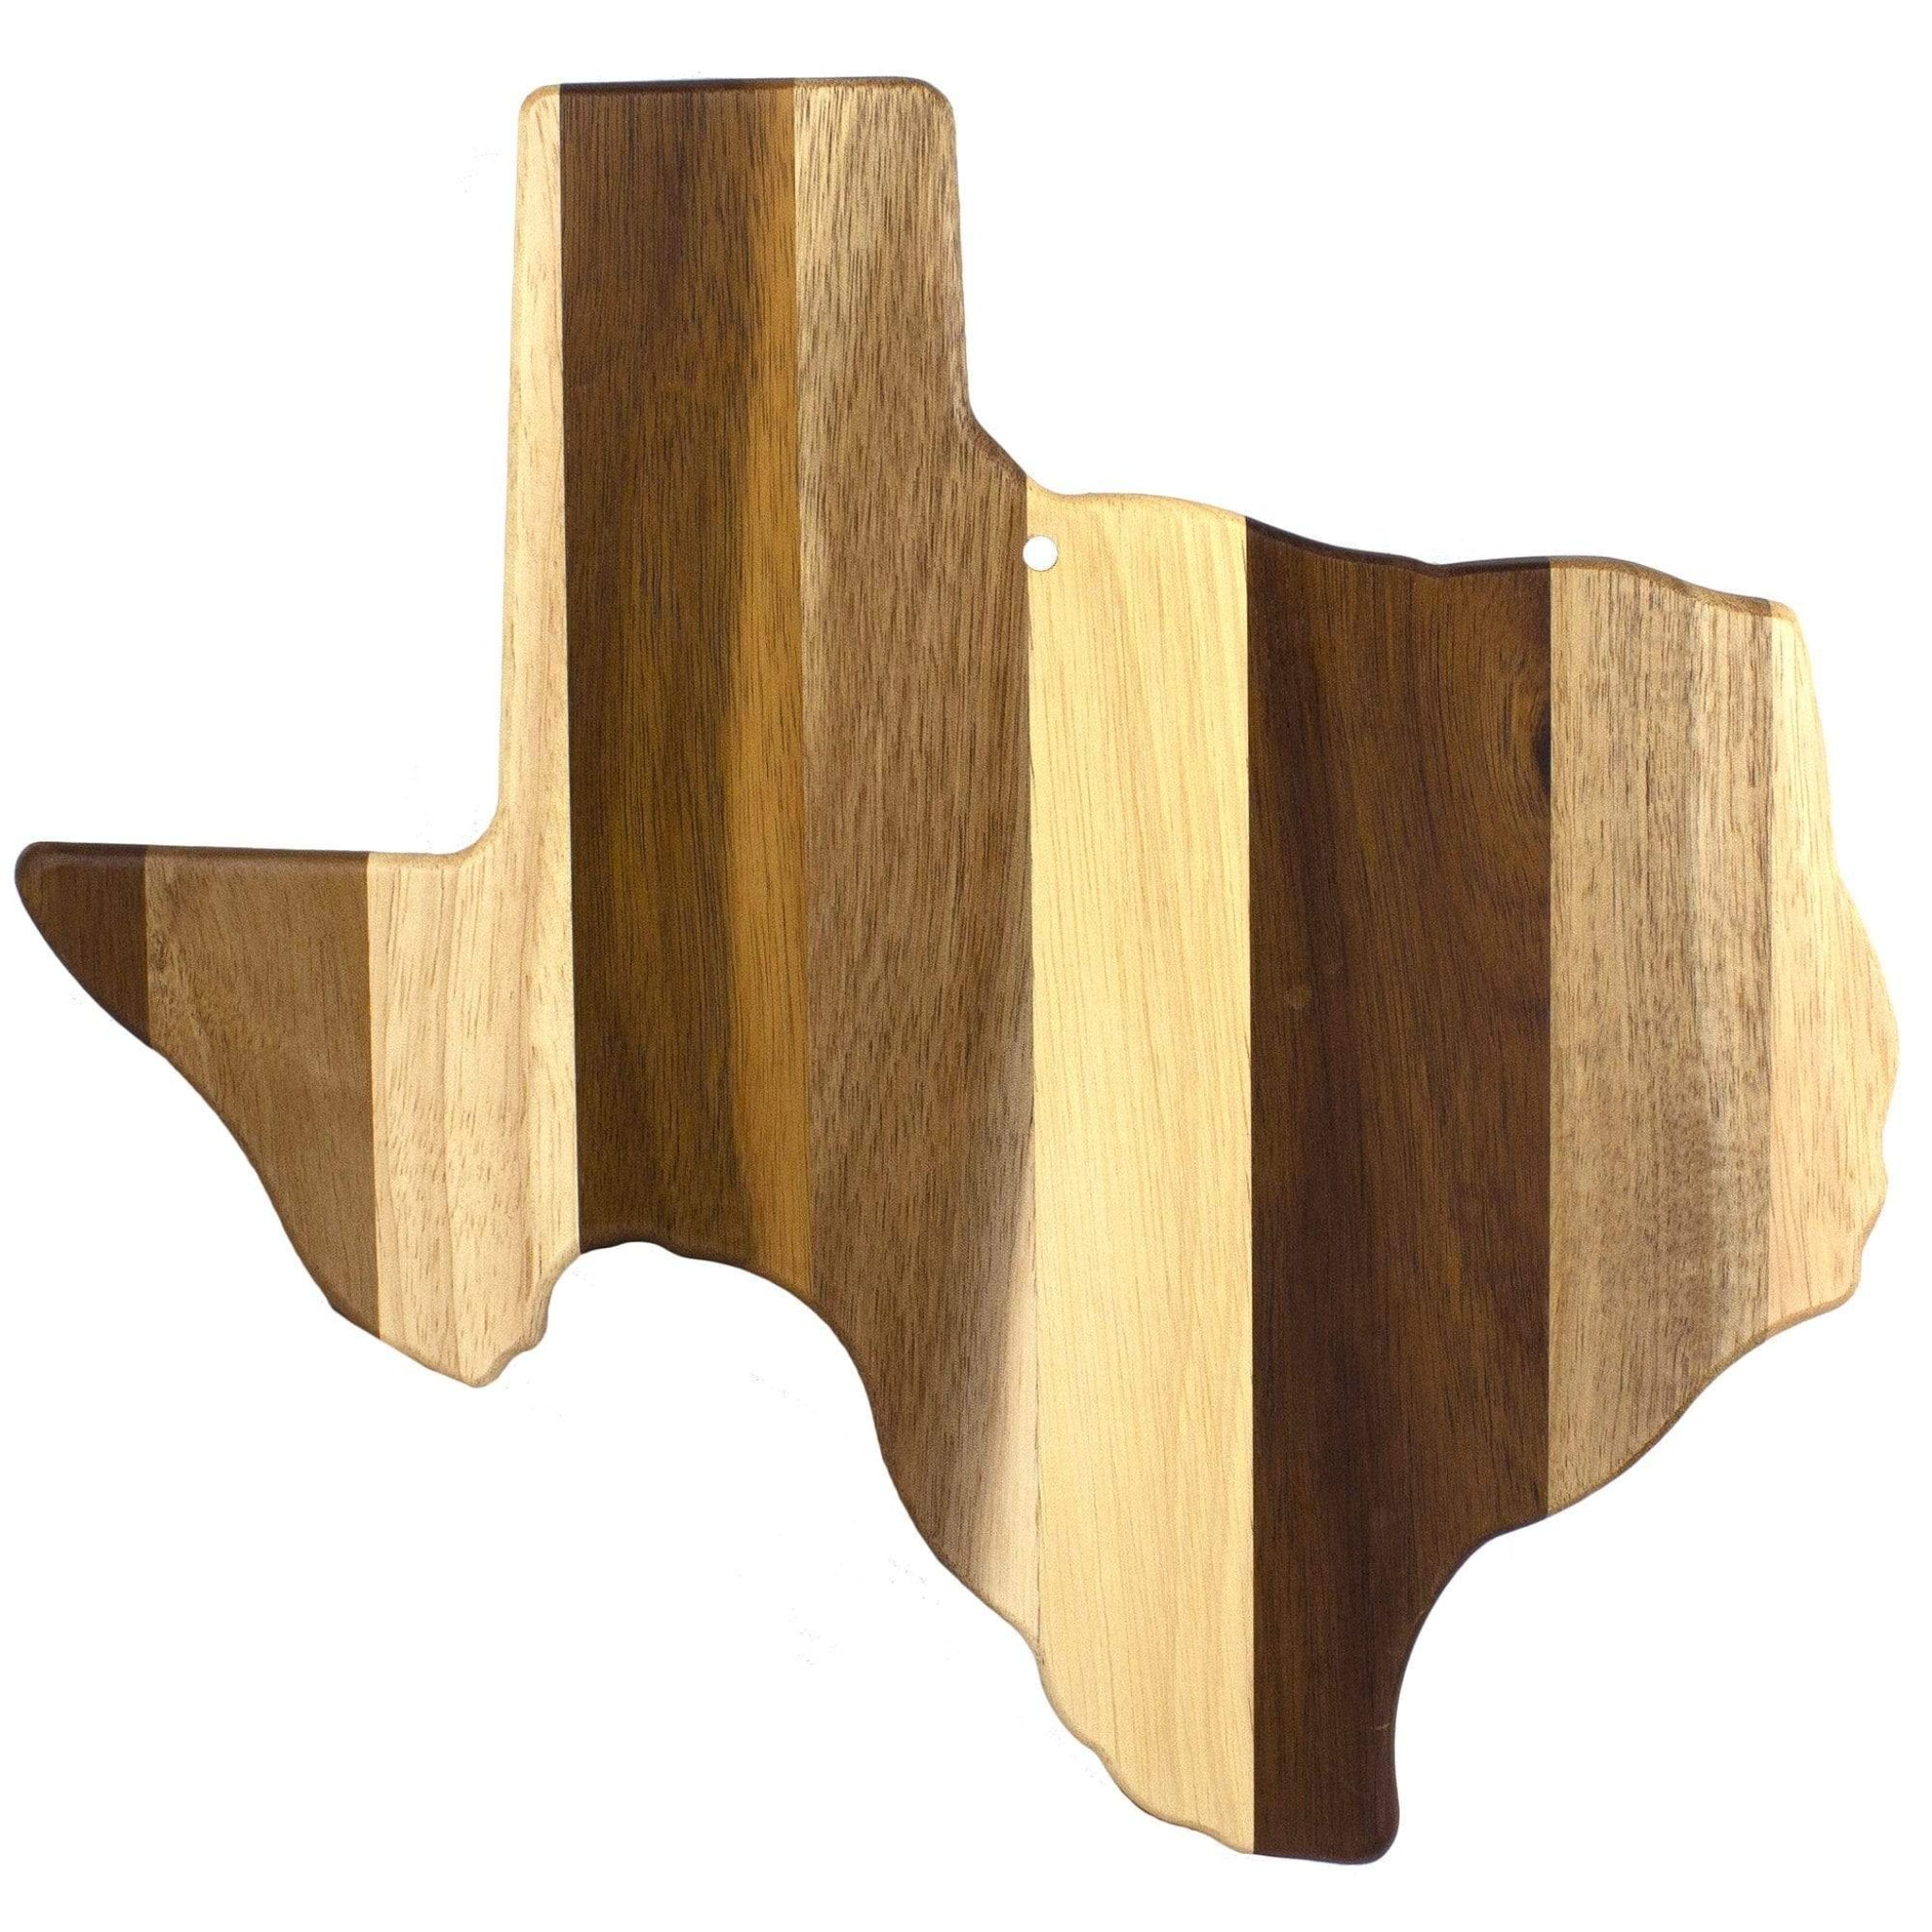 Shiplap Texas Cutting Board